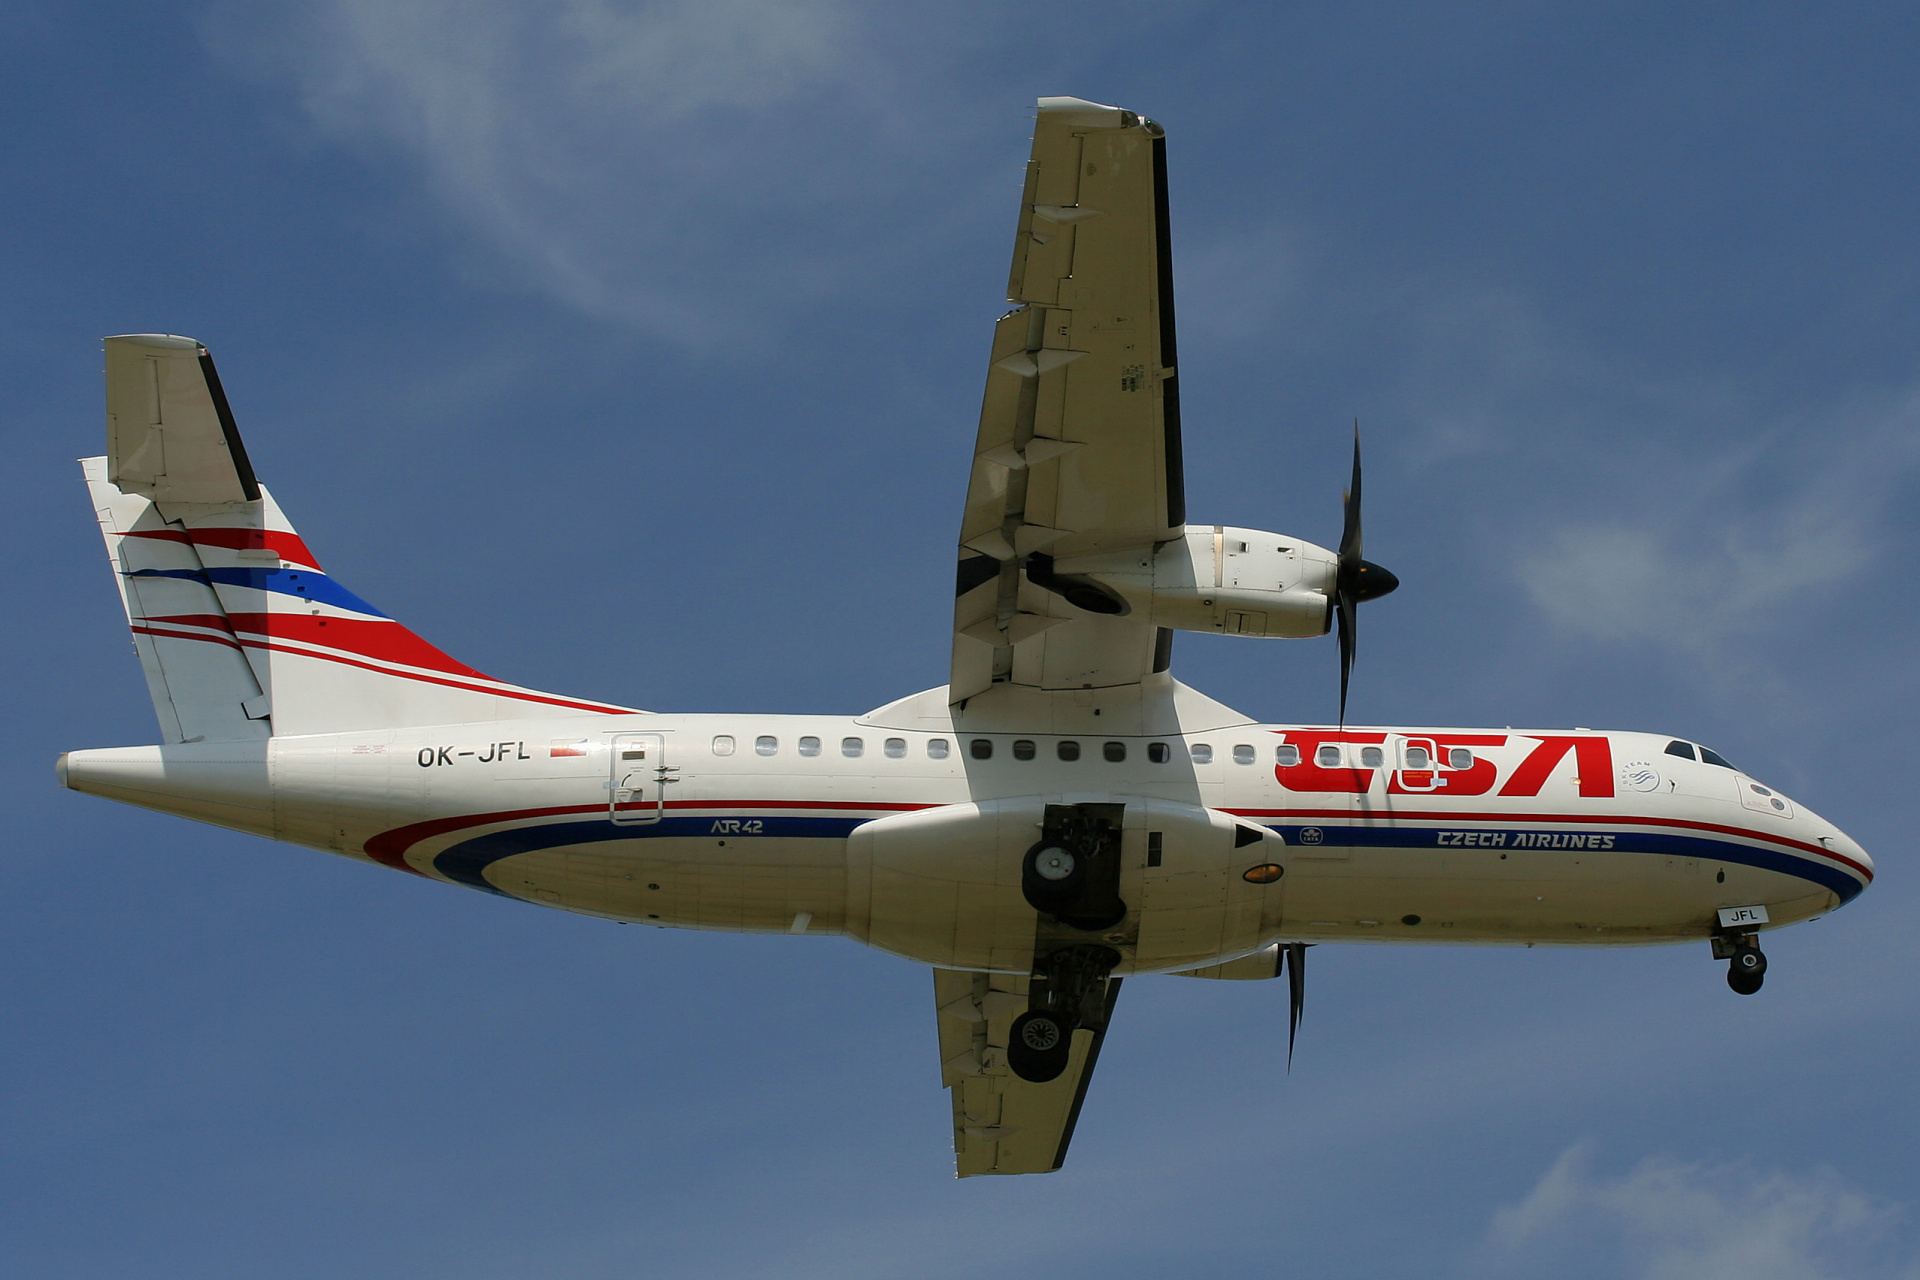 OK-JFL (Aircraft » EPWA Spotting » ATR 42 » CSA Czech Airlines)